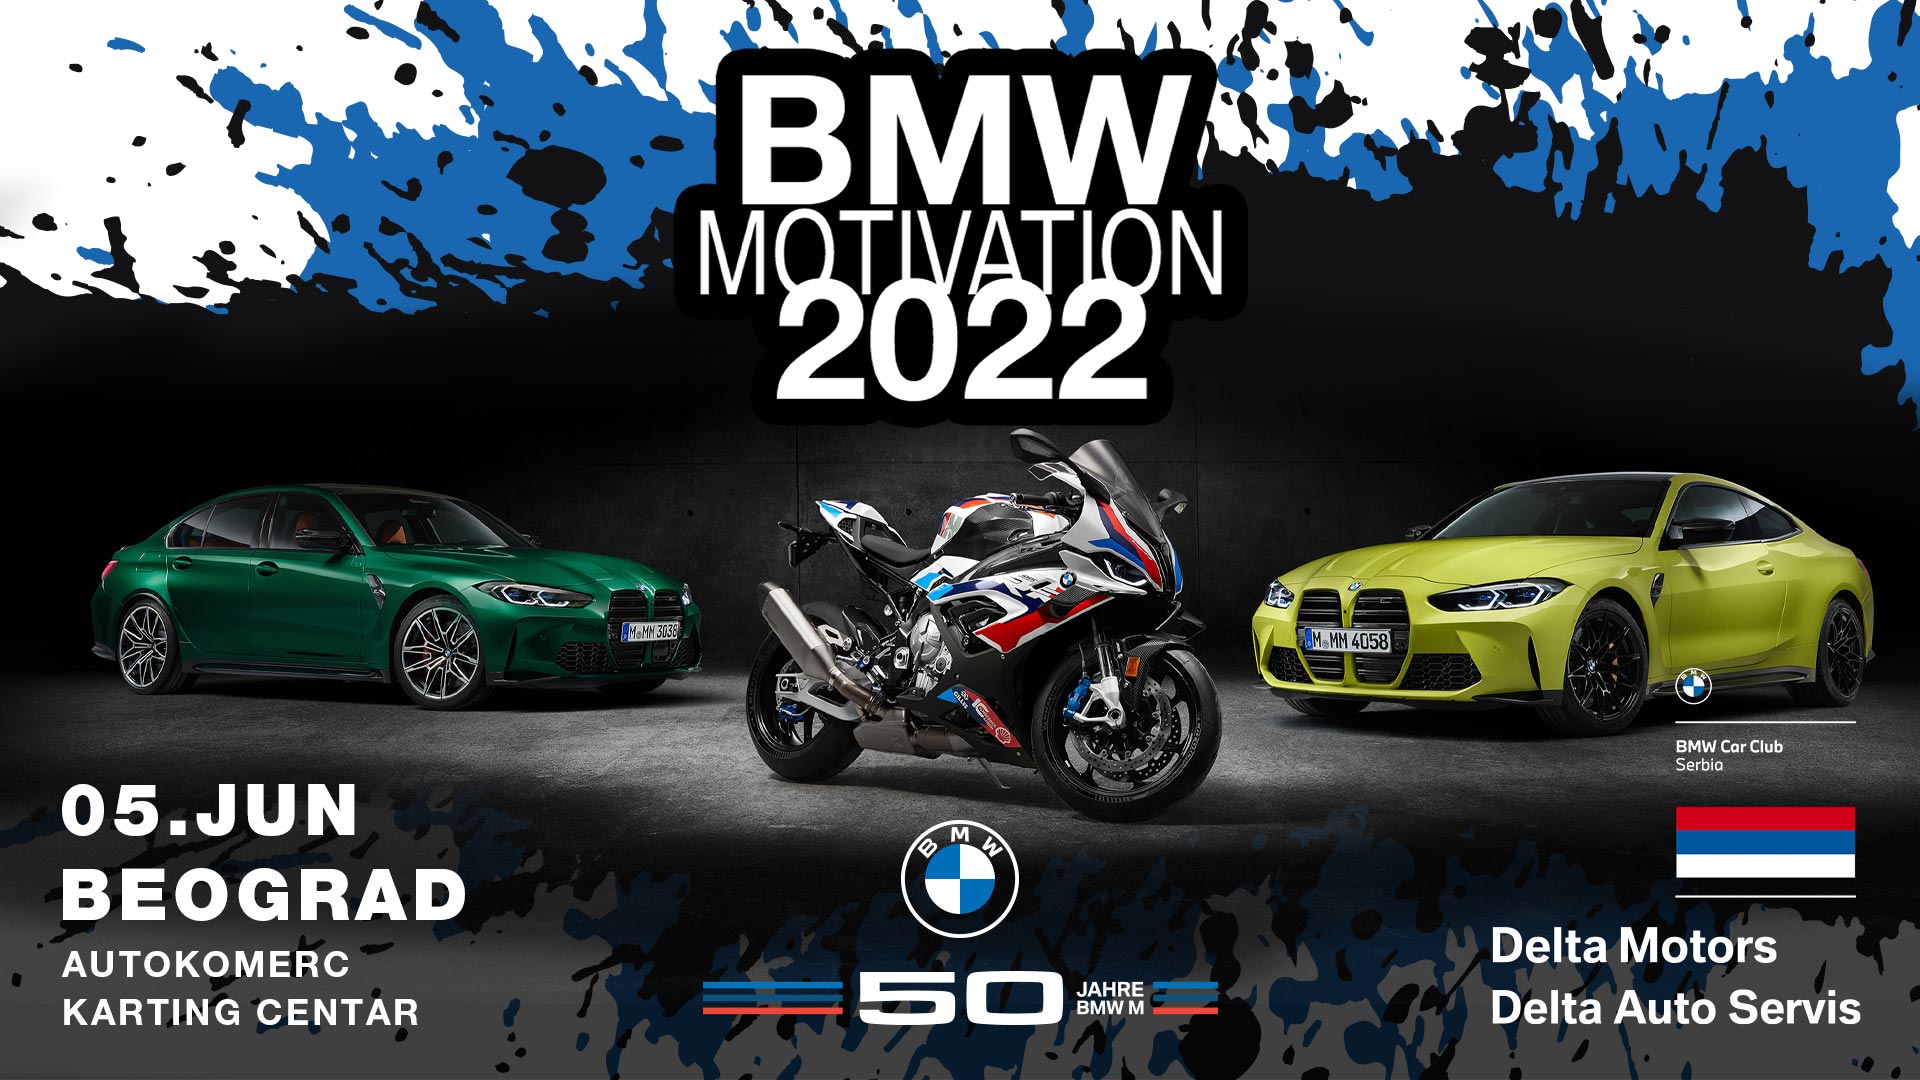 BMW MOTIVATION 2022